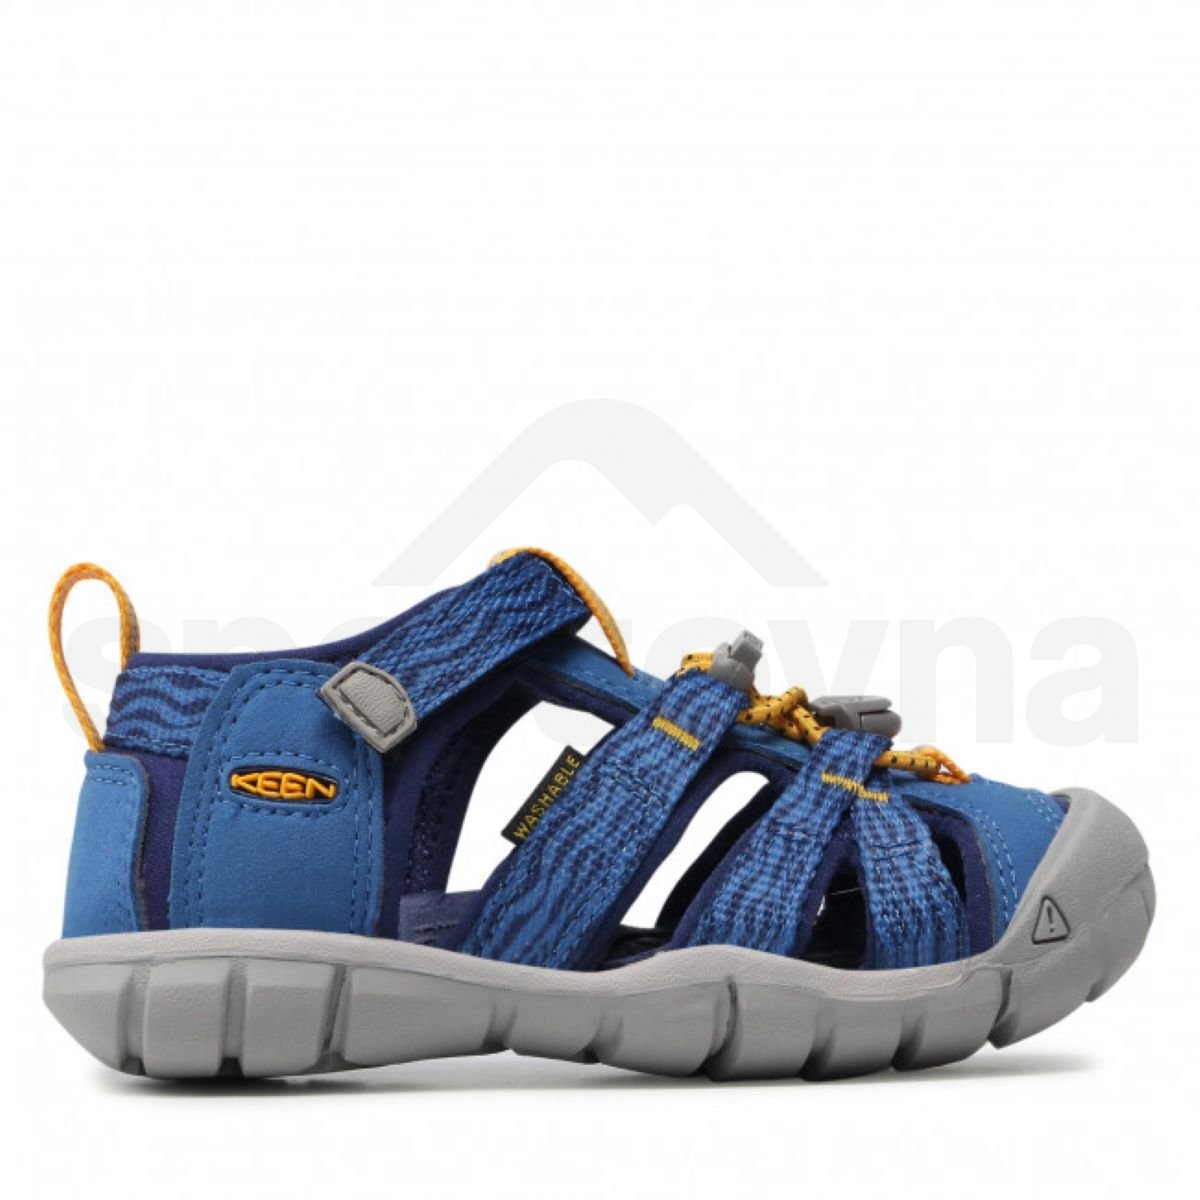 Obuv - sandály Keen Seacamp II CNX J - modrá/oranžová